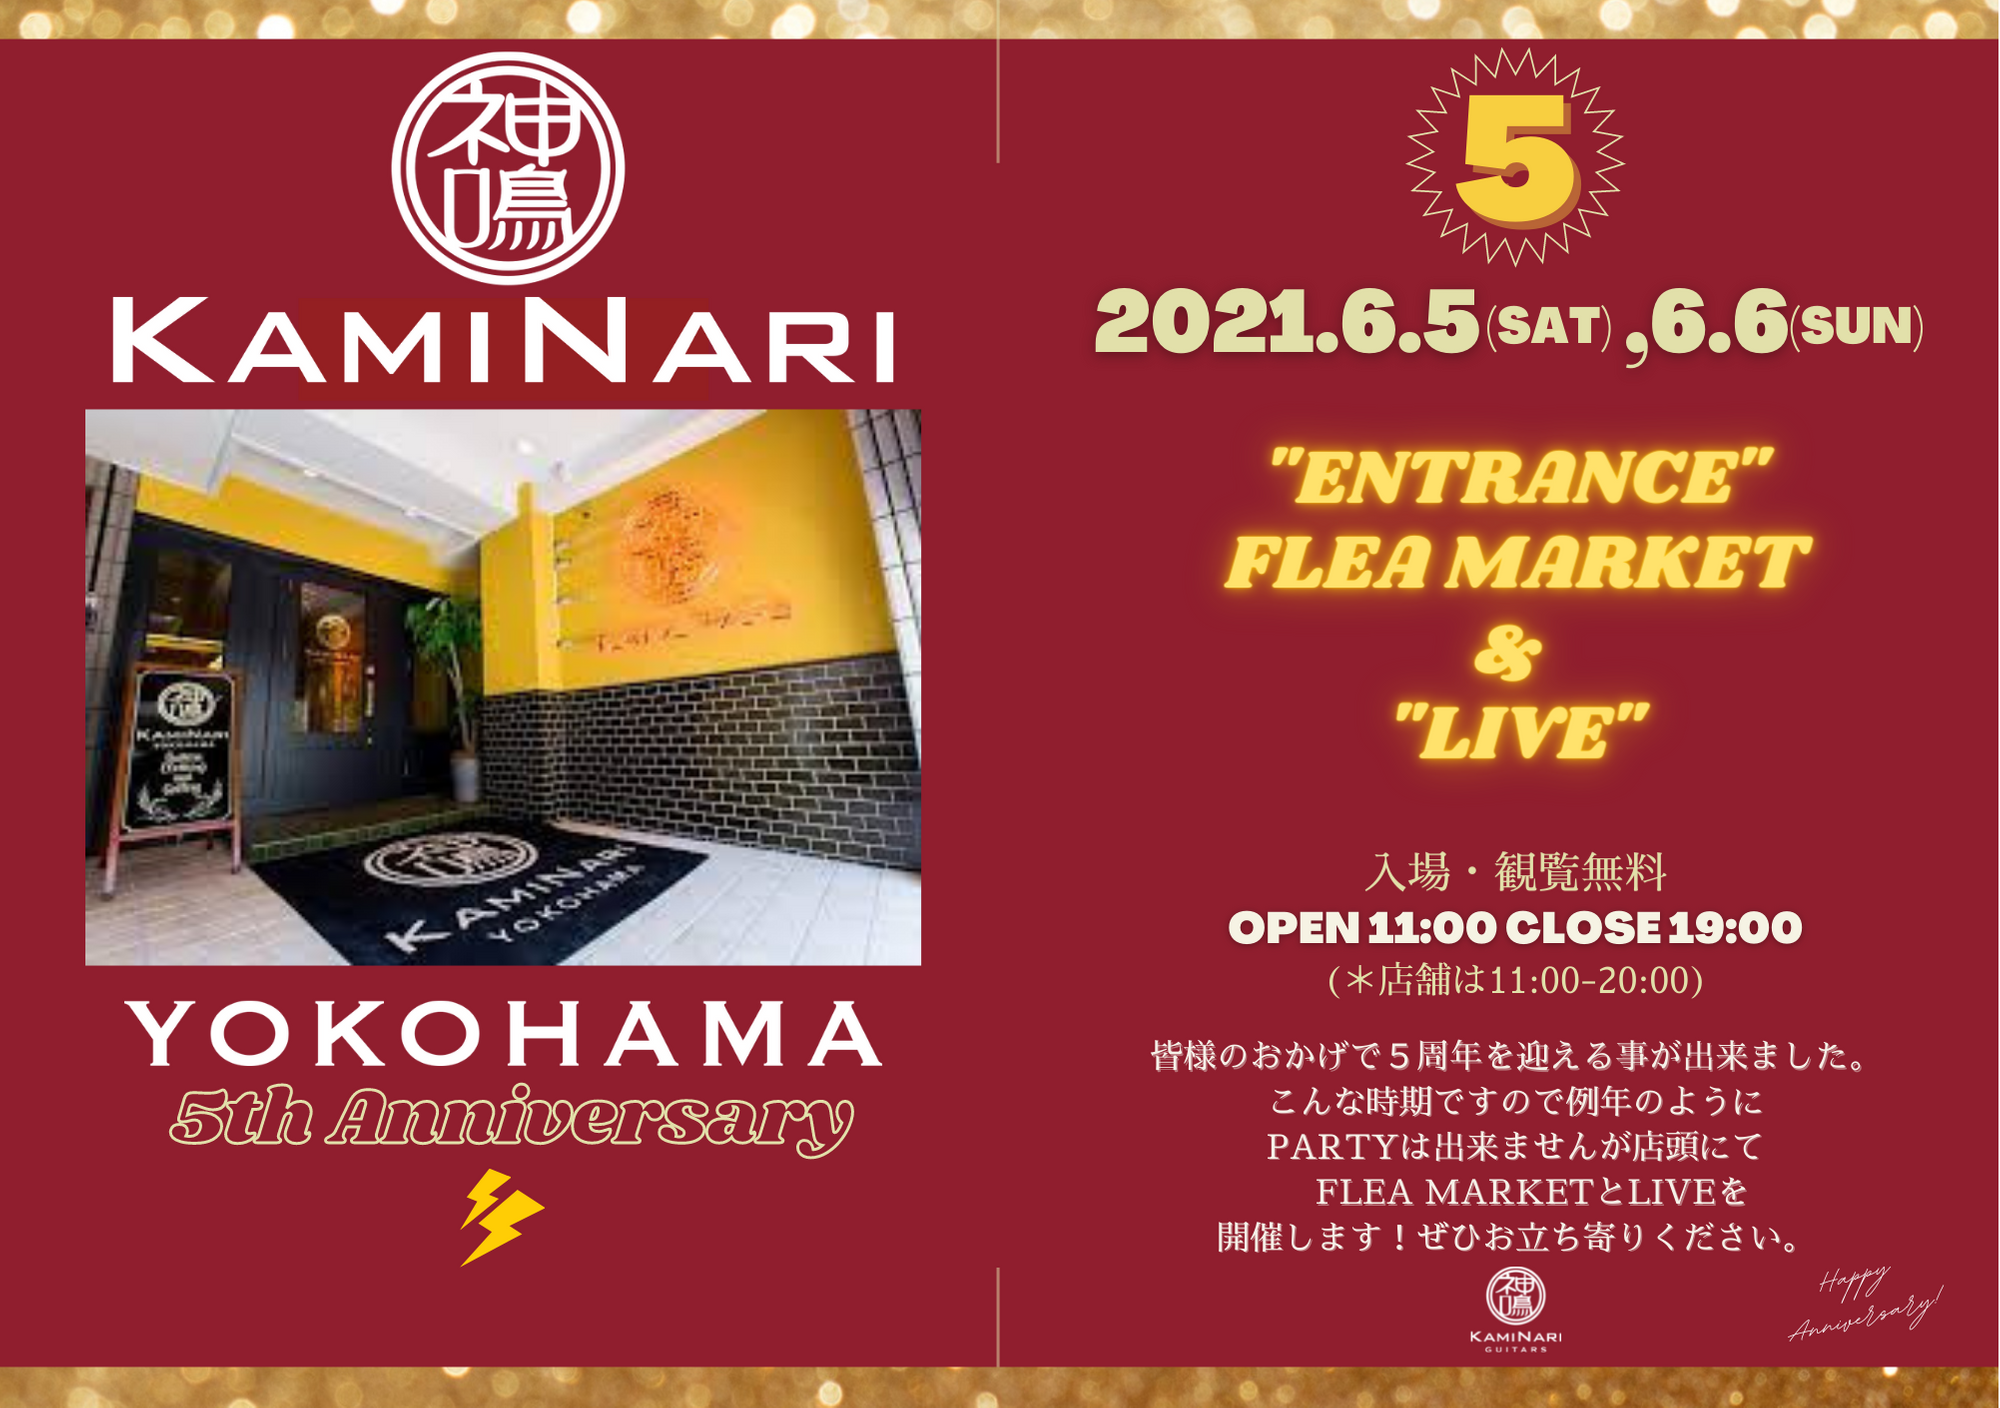 《KAMINARI YOKOHAMA 5周年記念イベント》開催のお知らせ